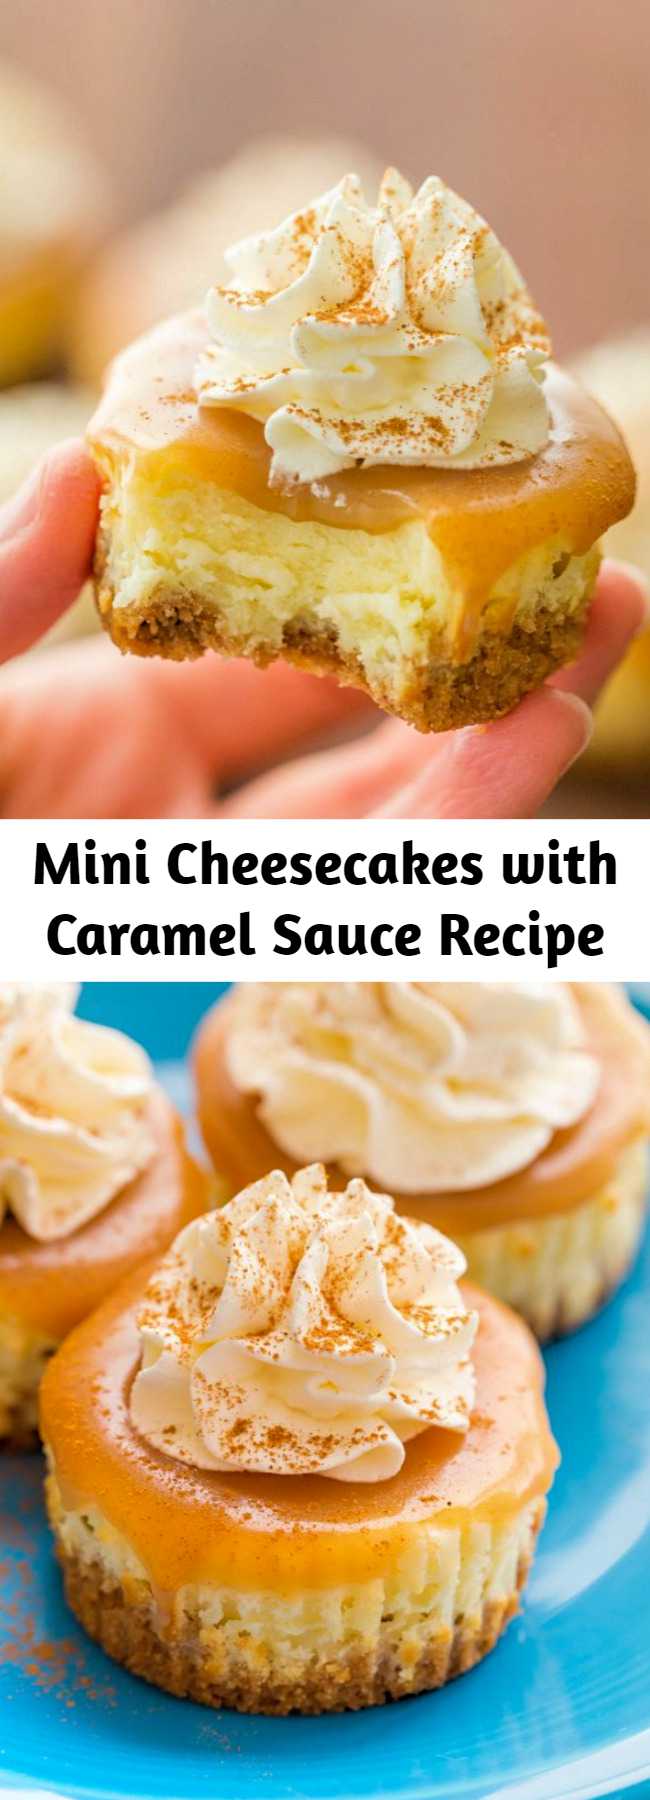 Mini Cheesecakes with Caramel Sauce Recipe